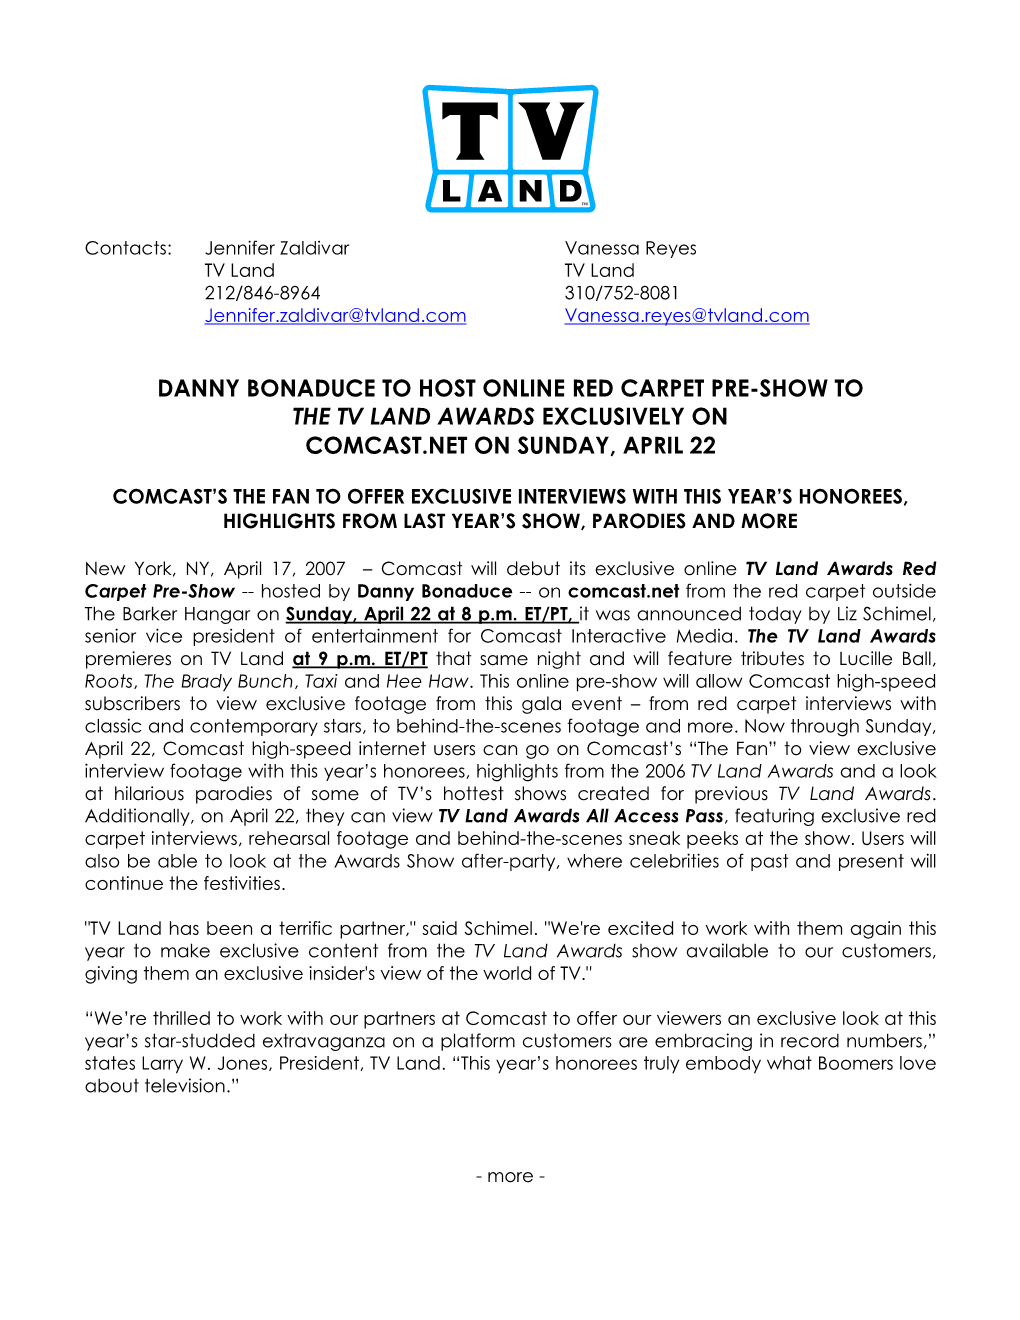 041707 Danny Bonaduce to Host Online Red Carpet Pre